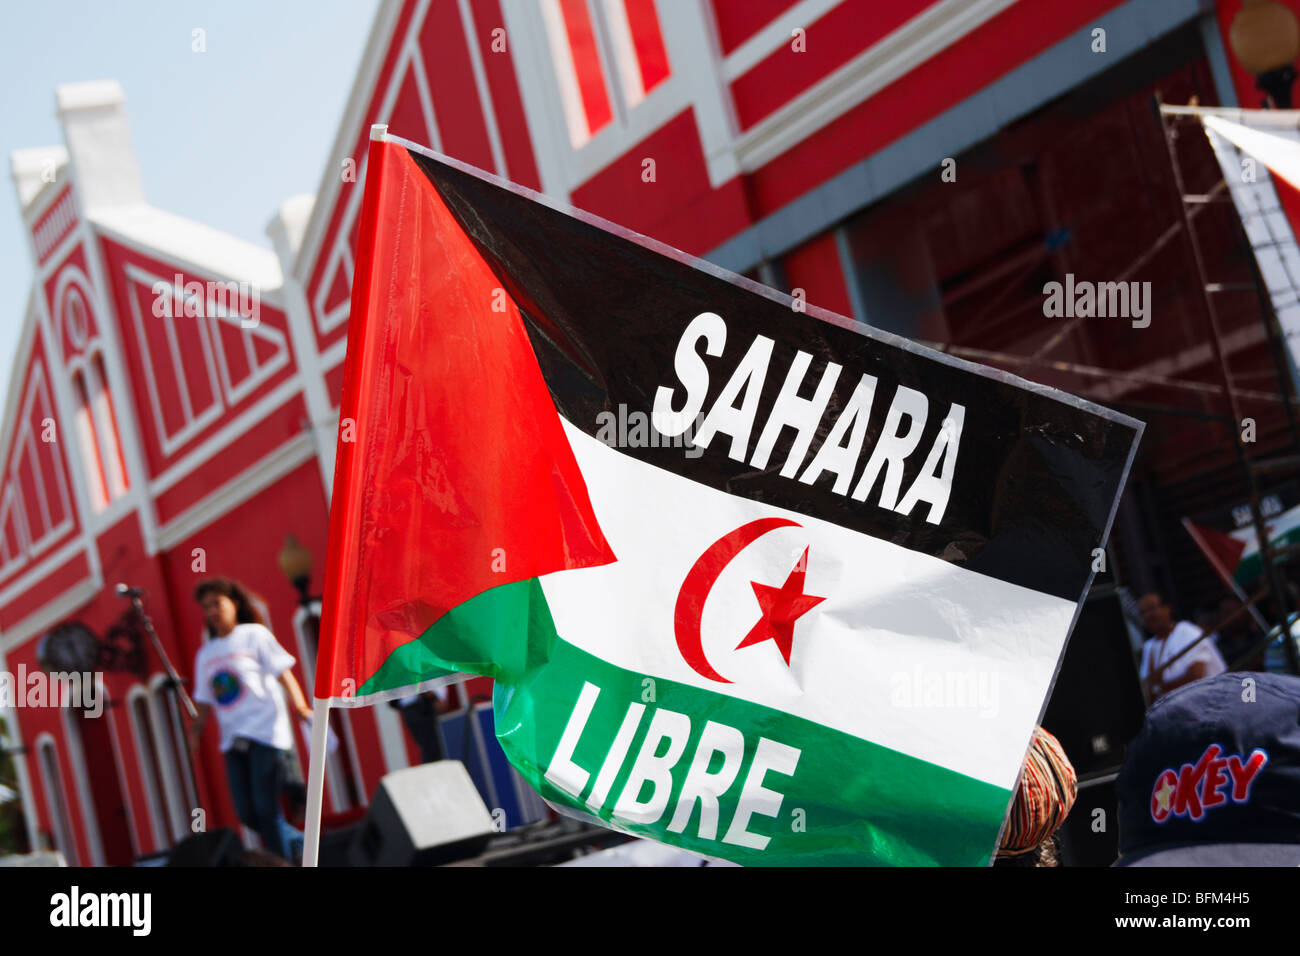 Les femmes du Sahara occidental portant des drapeaux disant 'Sahara libre' (Sahara libre) à la manifestation à Las Palmas de Gran Canaria. Banque D'Images